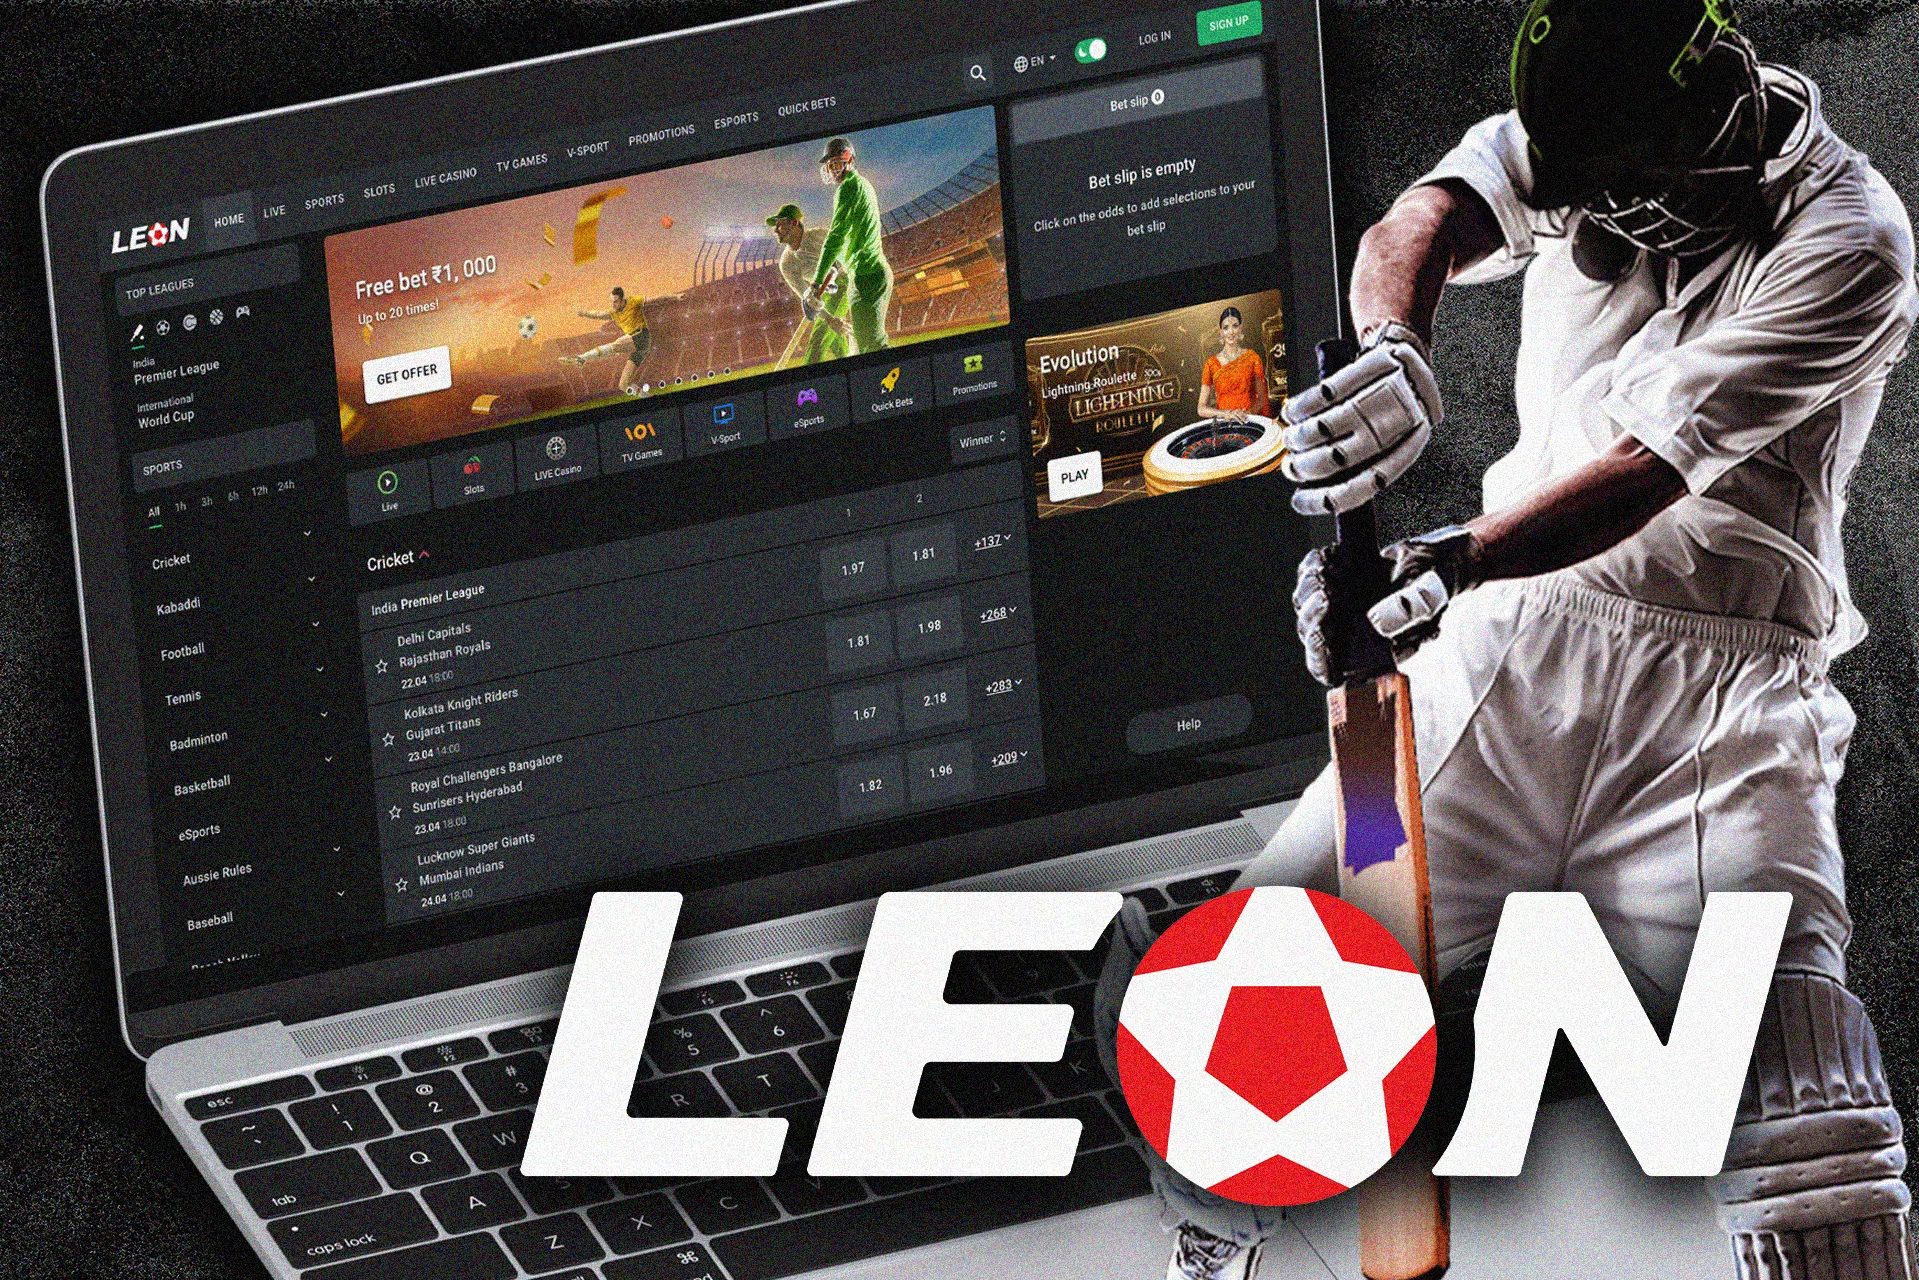 Leonbet offical website for cricket betting.